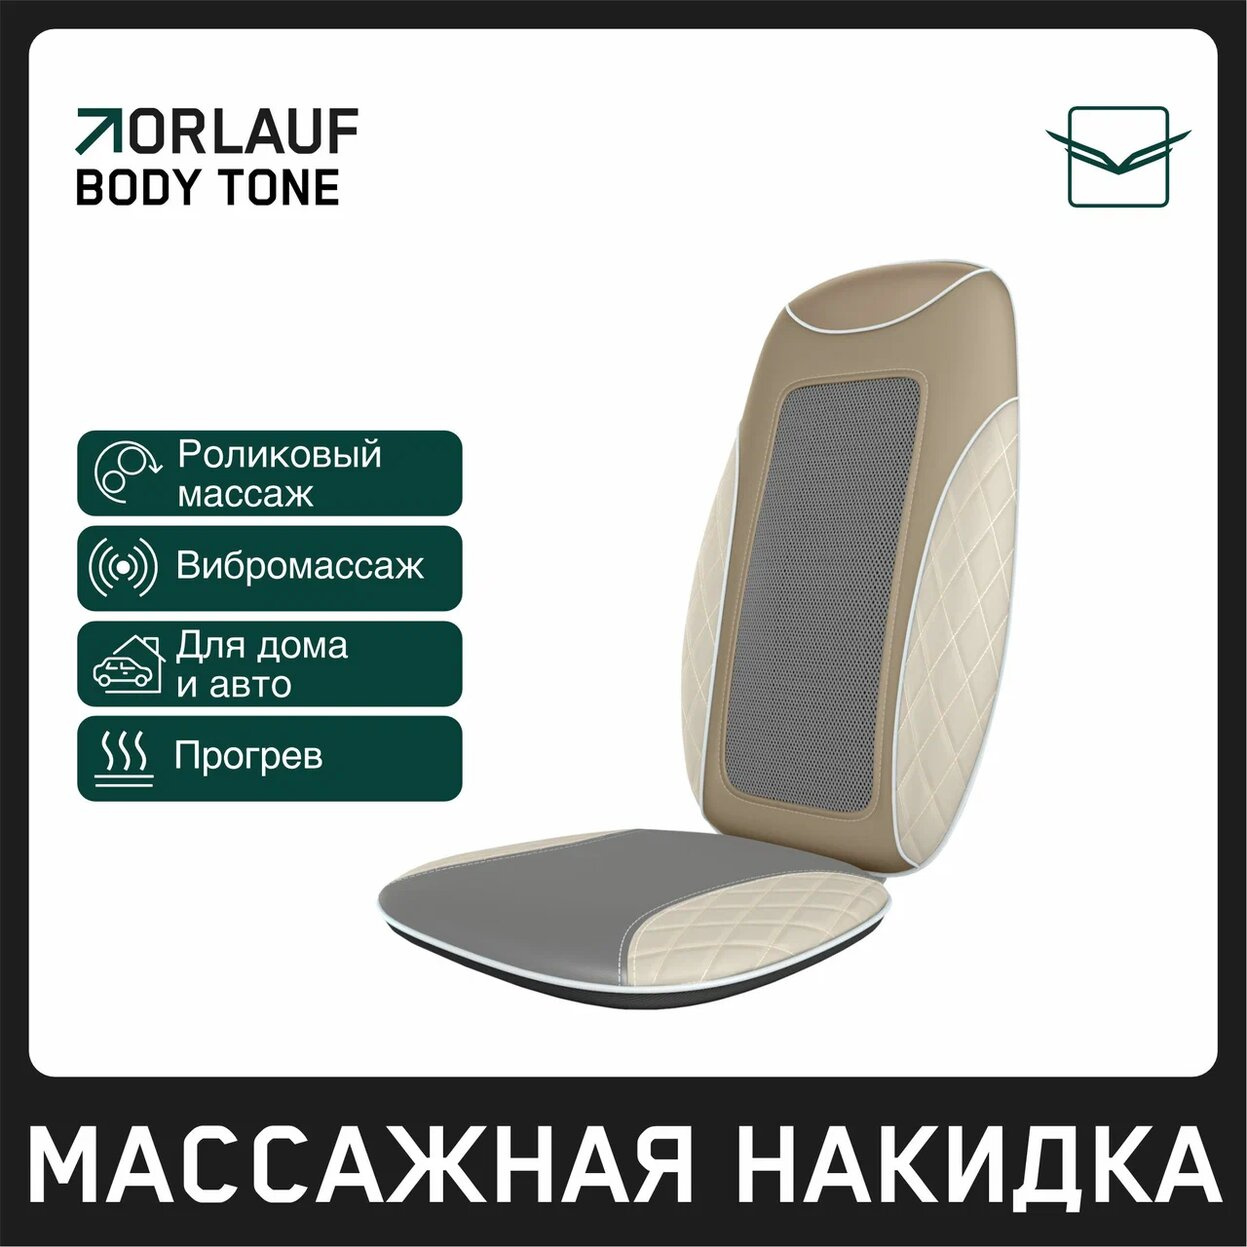 Body Tone в Челябинске по цене 15400 ₽ в категории каталог Orlauf